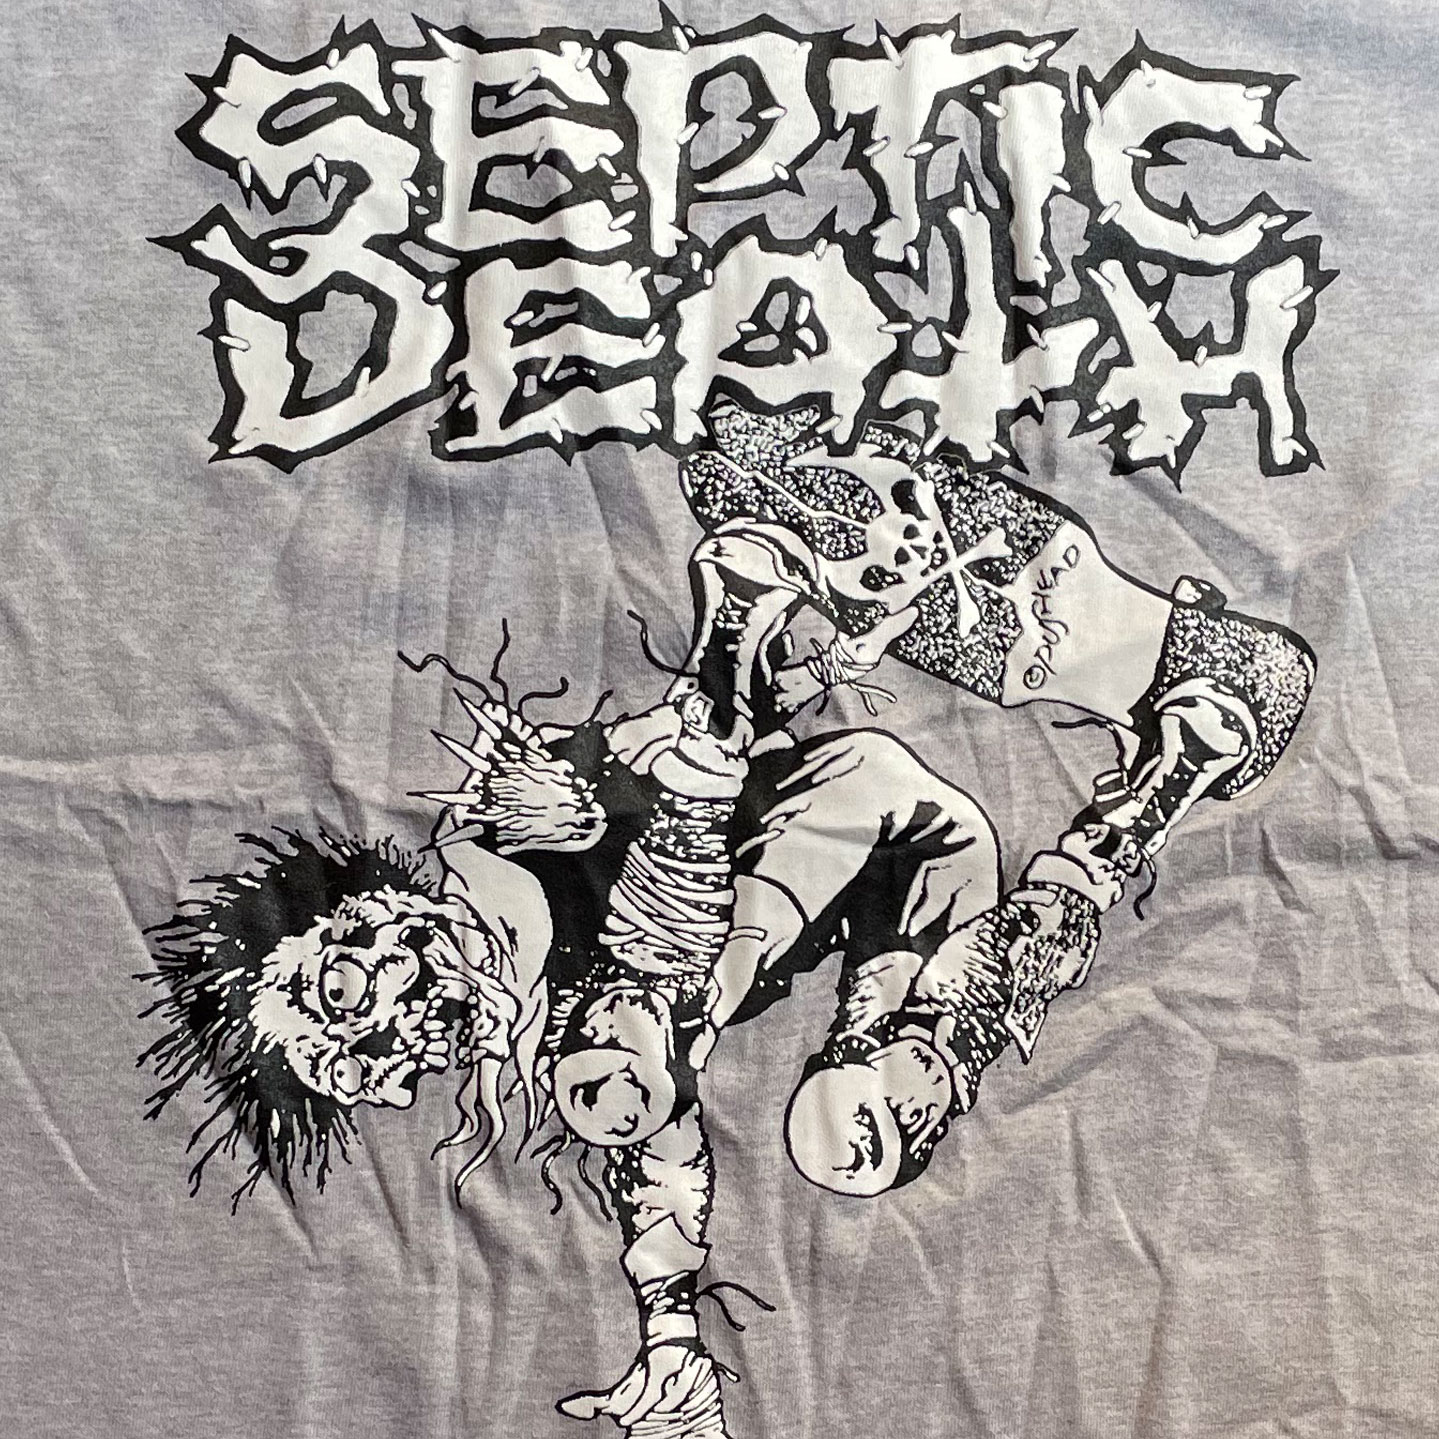 SEPTIC DEATH Tシャツ HANDPLANT